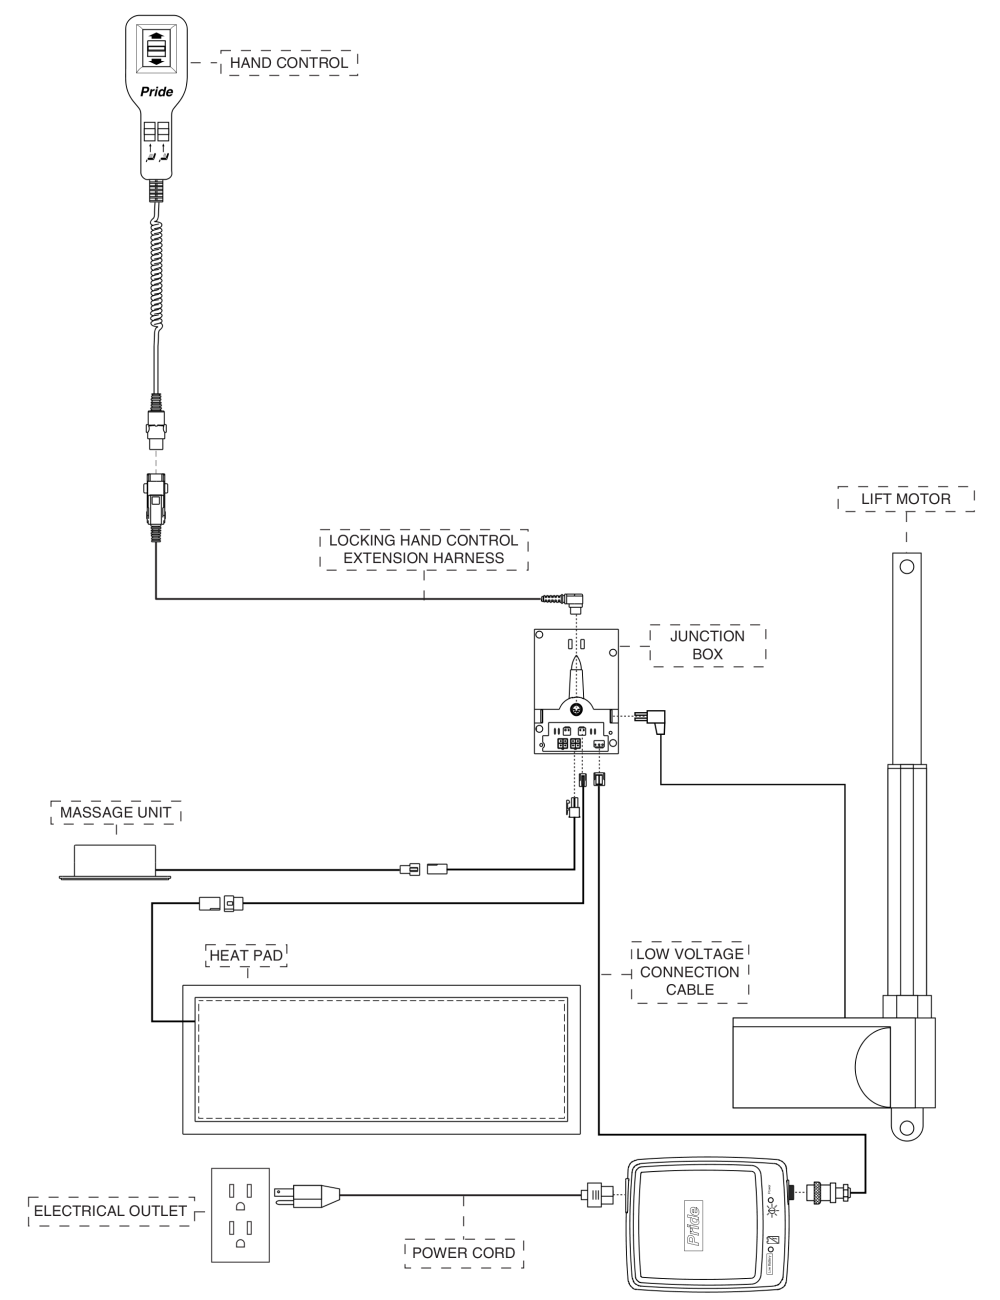 Electrical Diagram, C40_us parts diagram